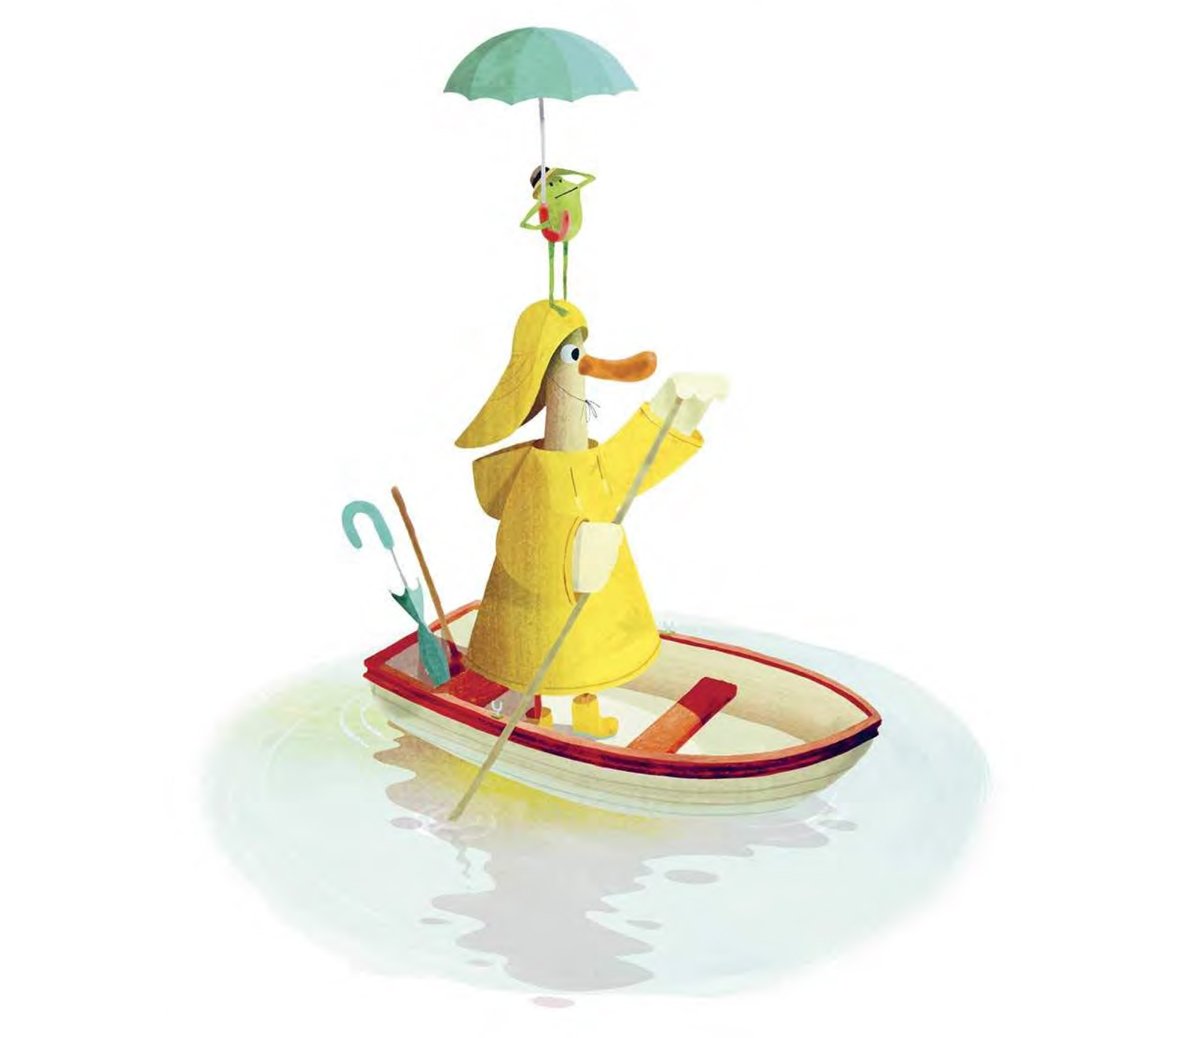 Steve-Small-Duck-rowing-illustration.jpg